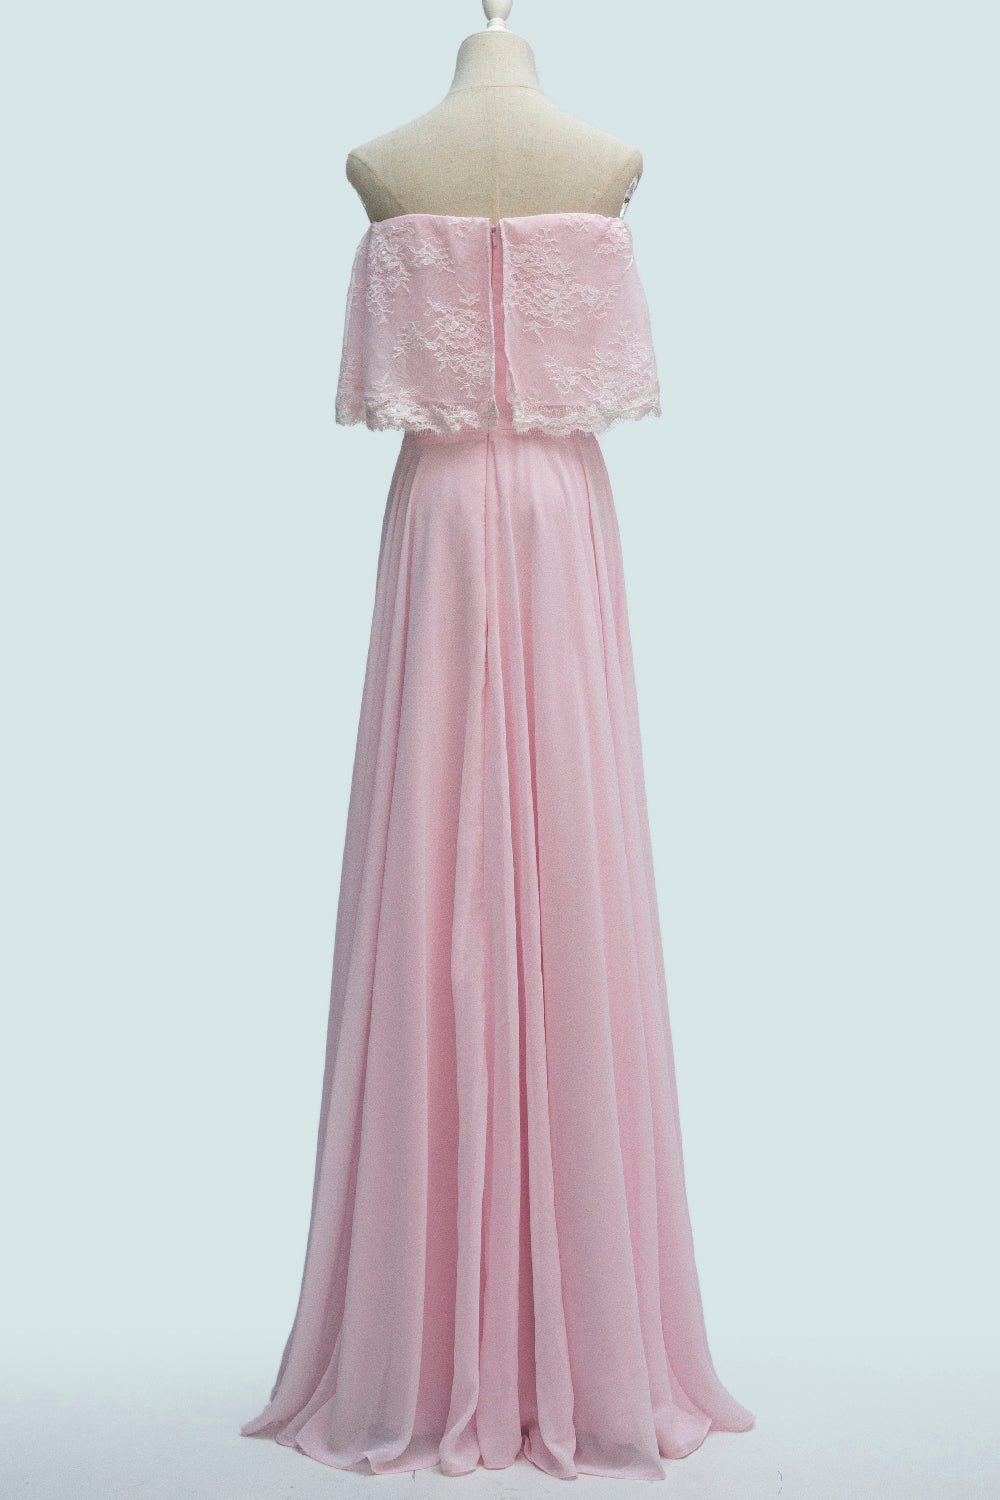 Candy Pink A-line Strapless Chiffon Ruffle Applique Long Bridesmaid Dress